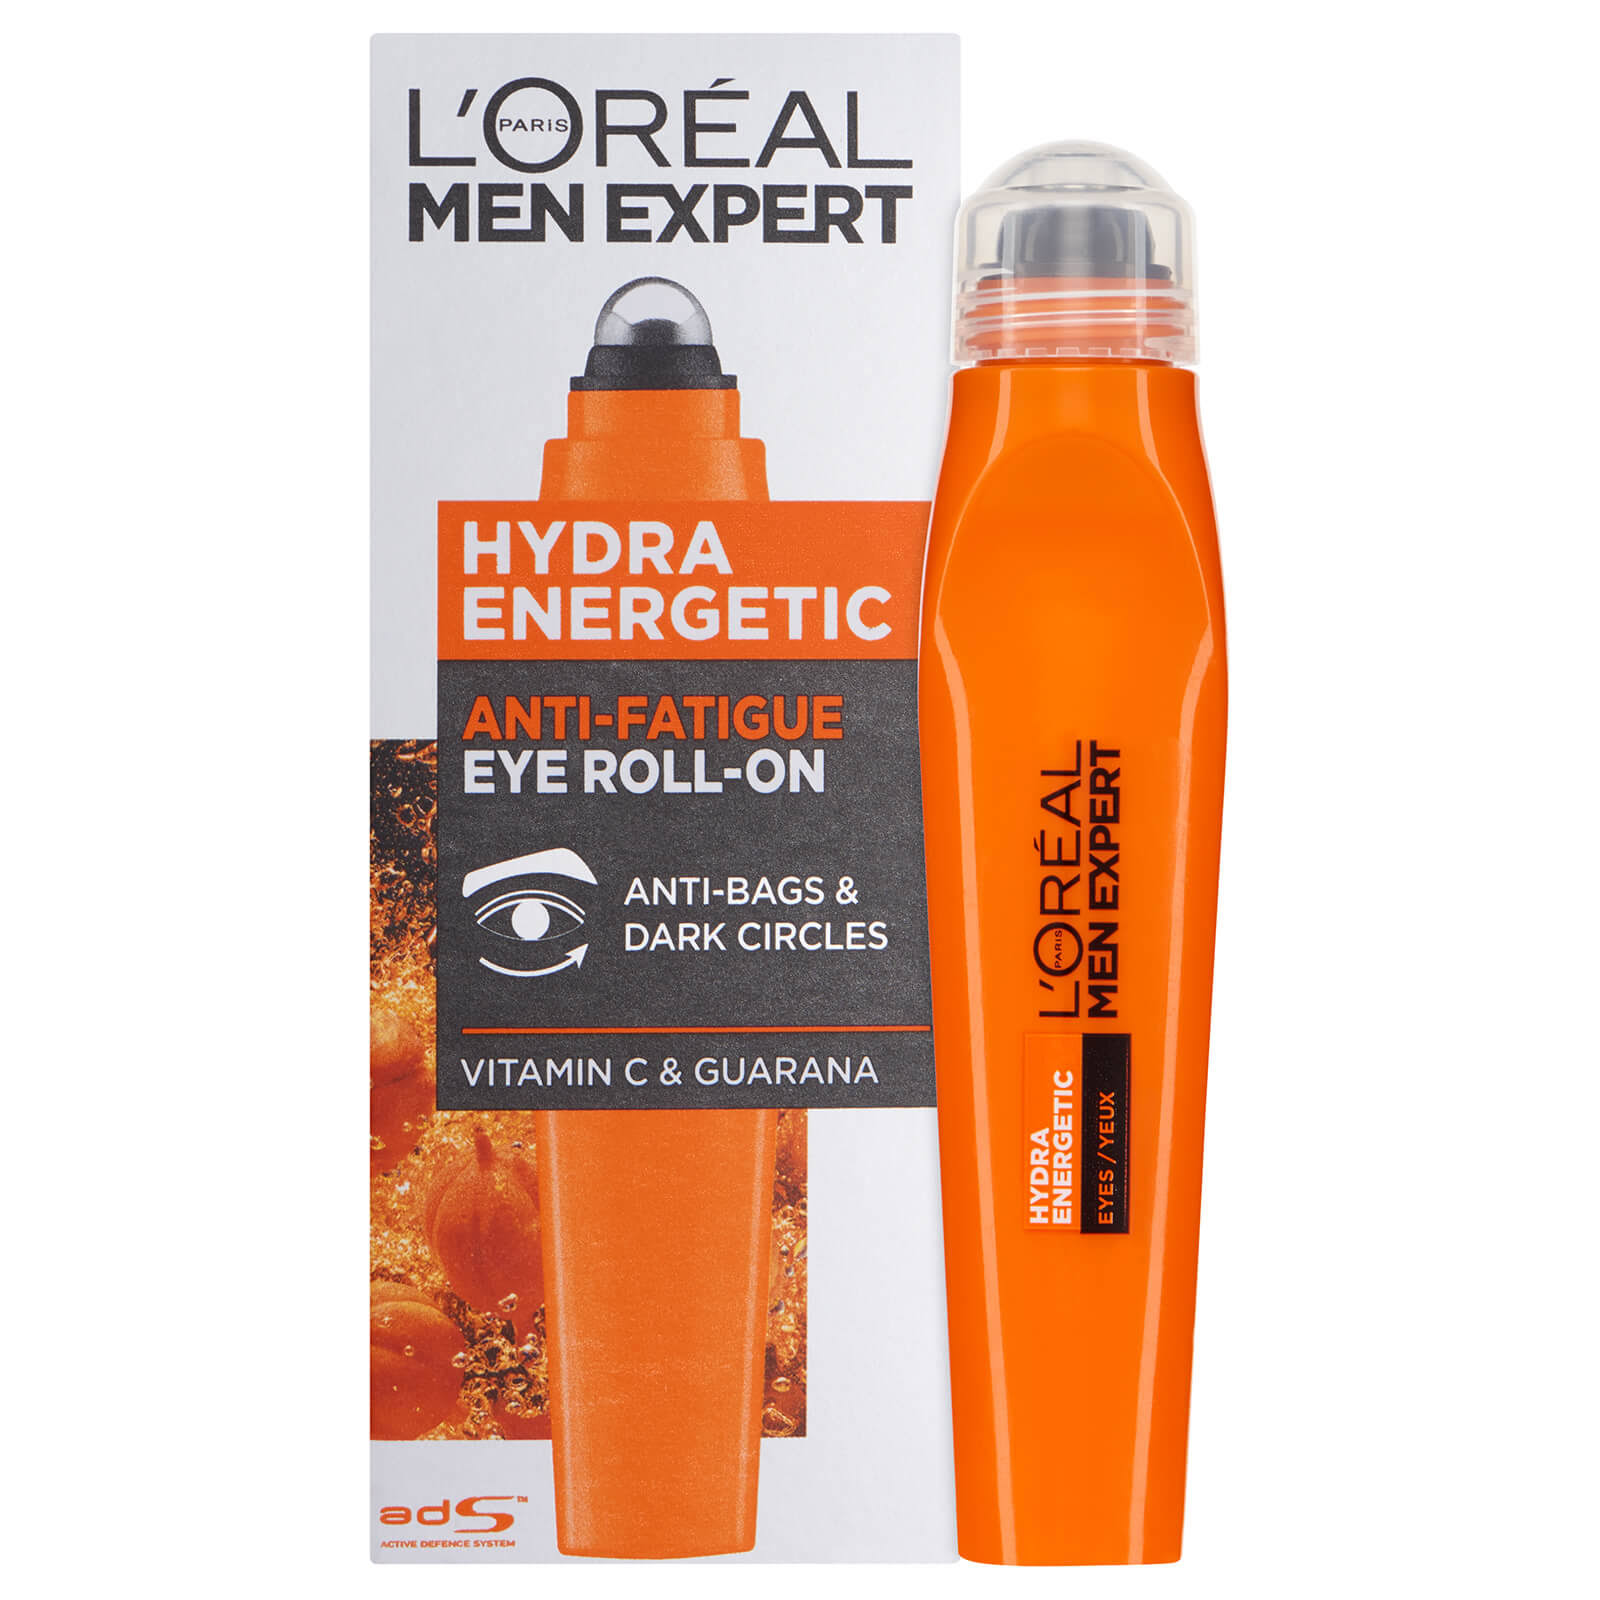 L'oreal Men Expert Hydra Energetic Anti Fatigue Eye Roll On - 10ml